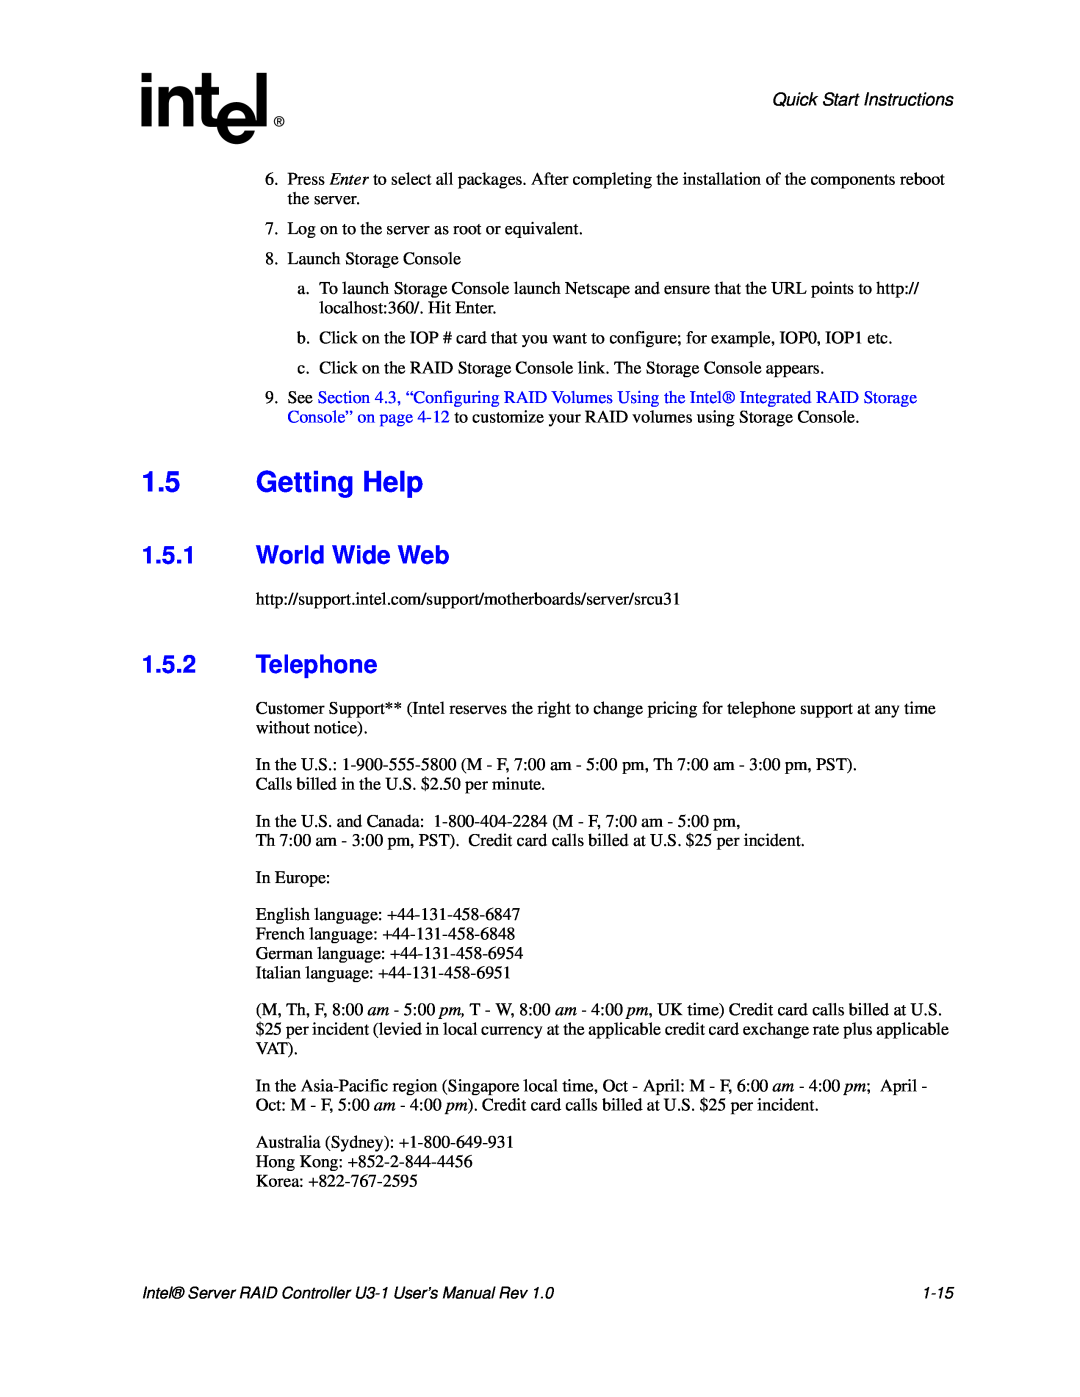 Intel SRCU31 user manual 1.5Getting Help, 1.5.1World Wide Web, 1.5.2Telephone, Quick Start Instructions 